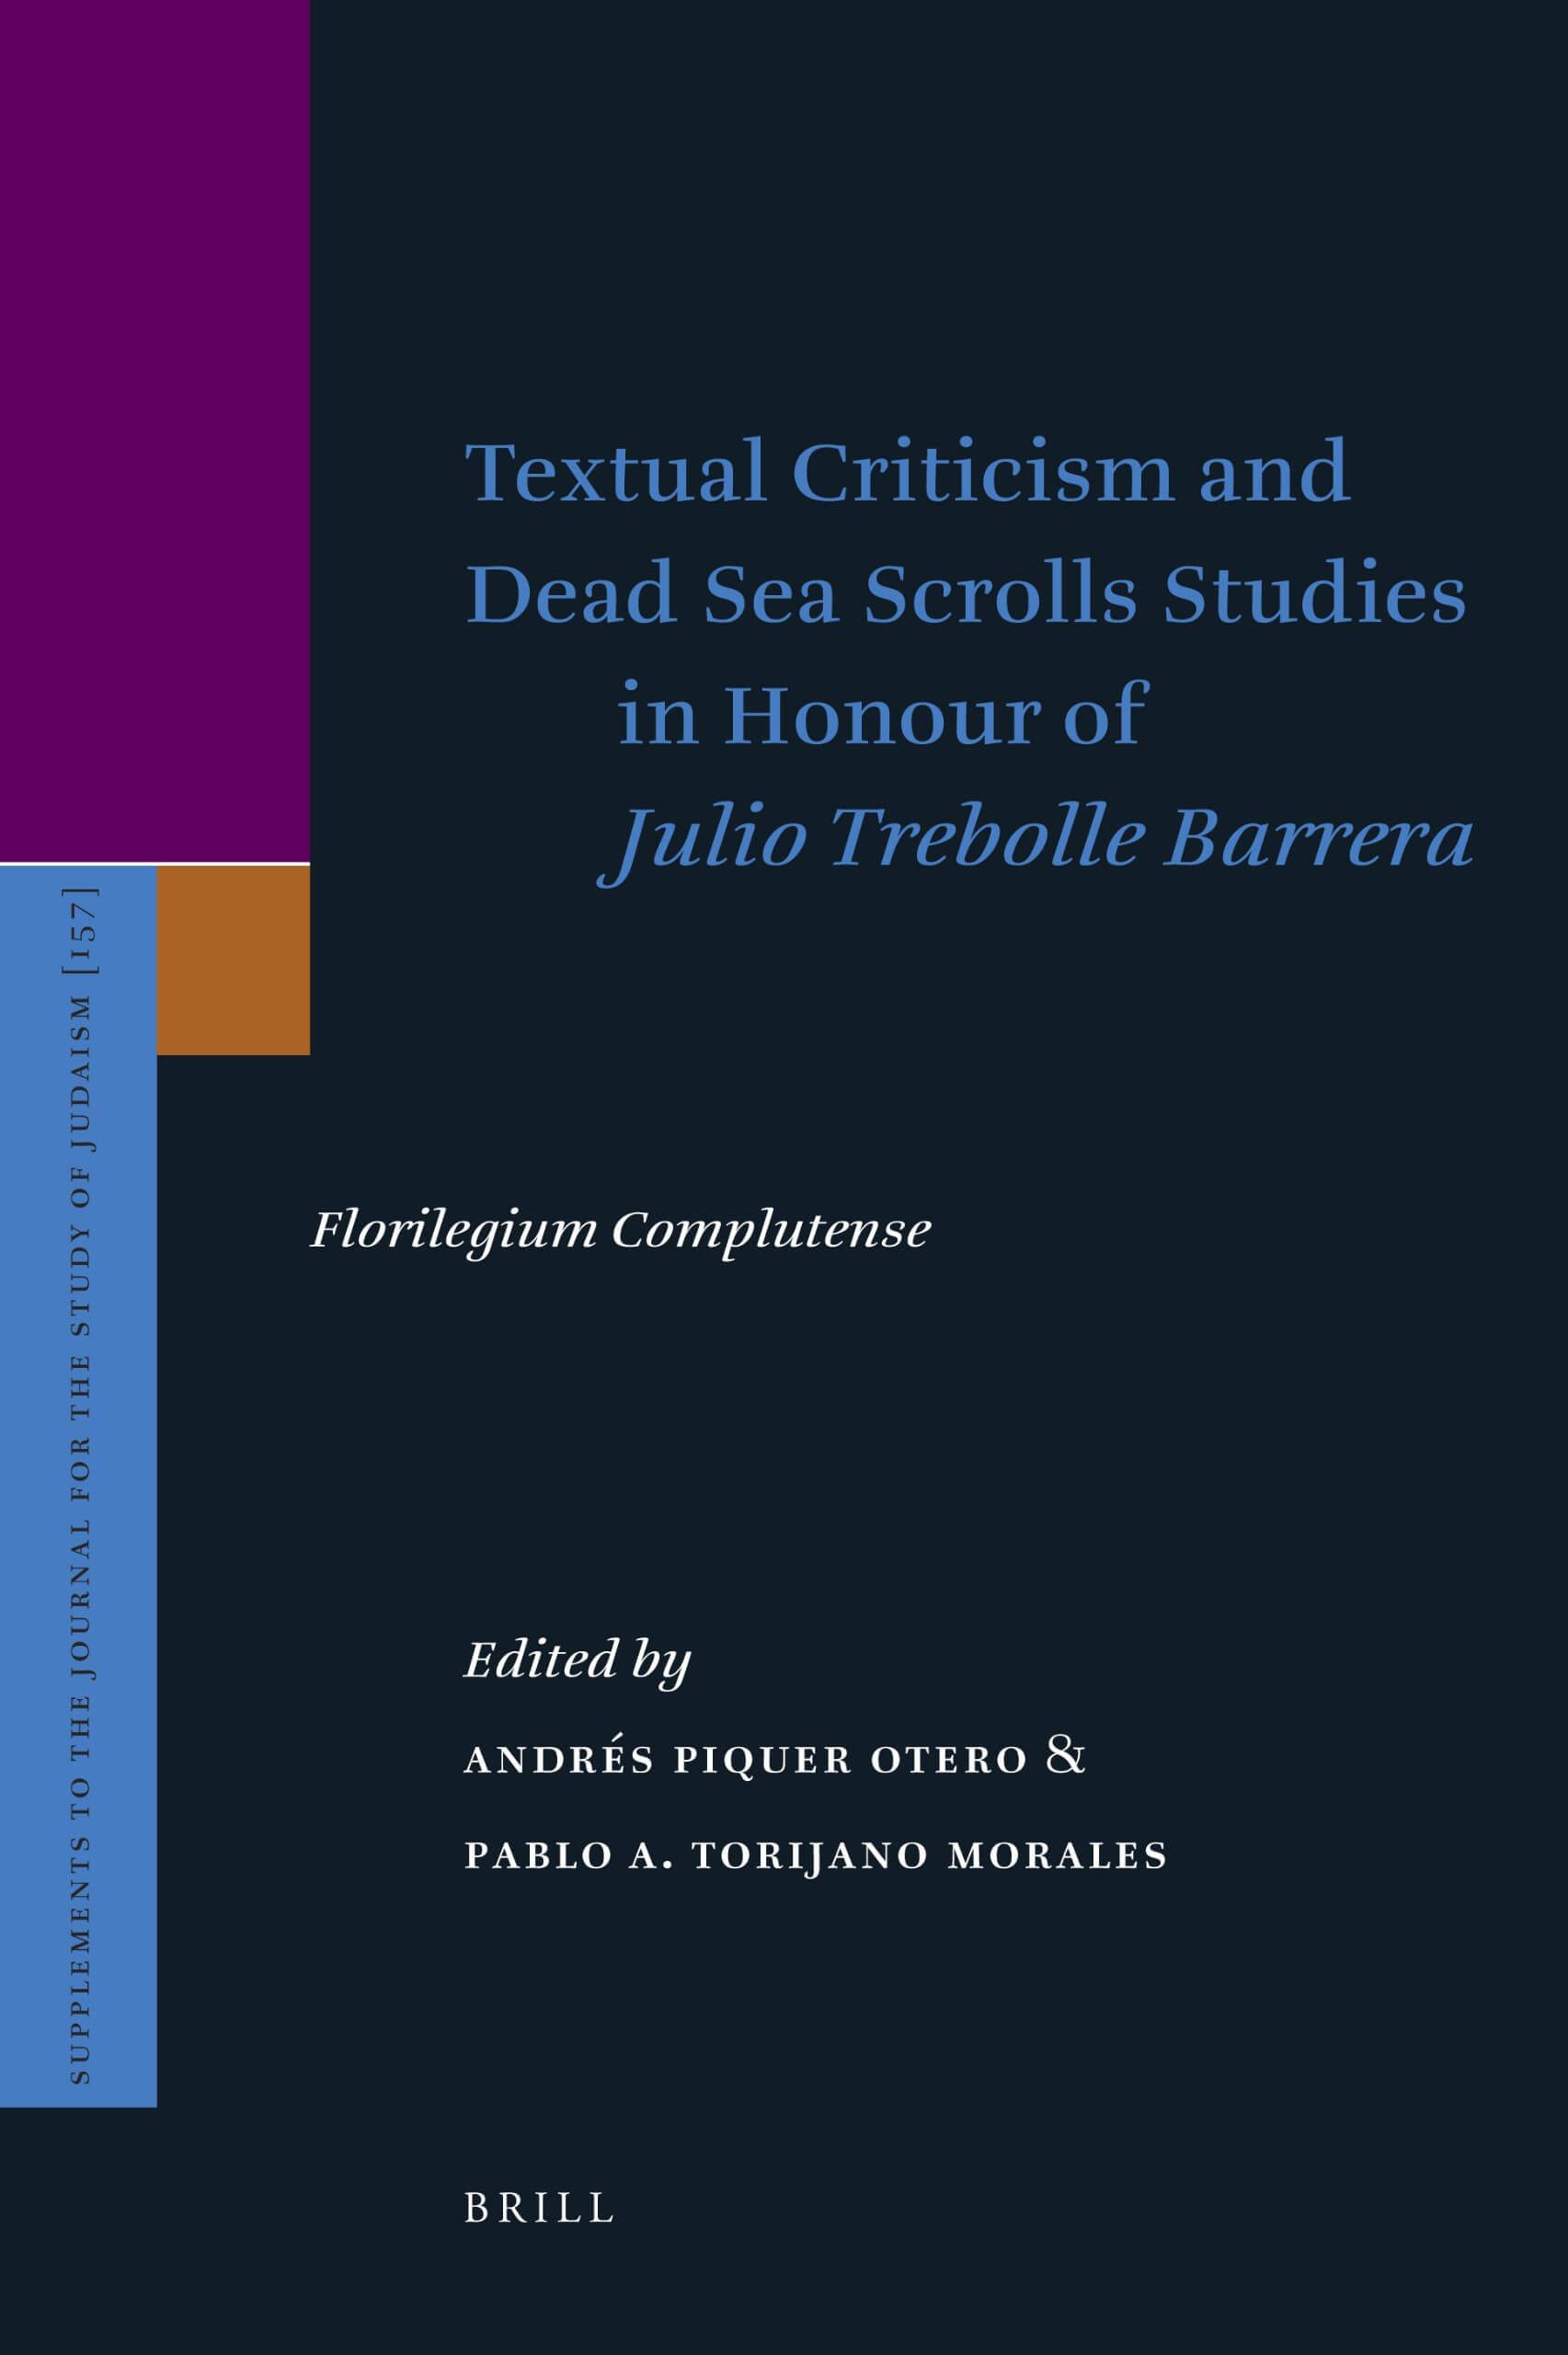 Textual Criticism and Dead Sea Scrolls. Studies in Honour of Julio Trebolle Barrera. Florilegium Complutense